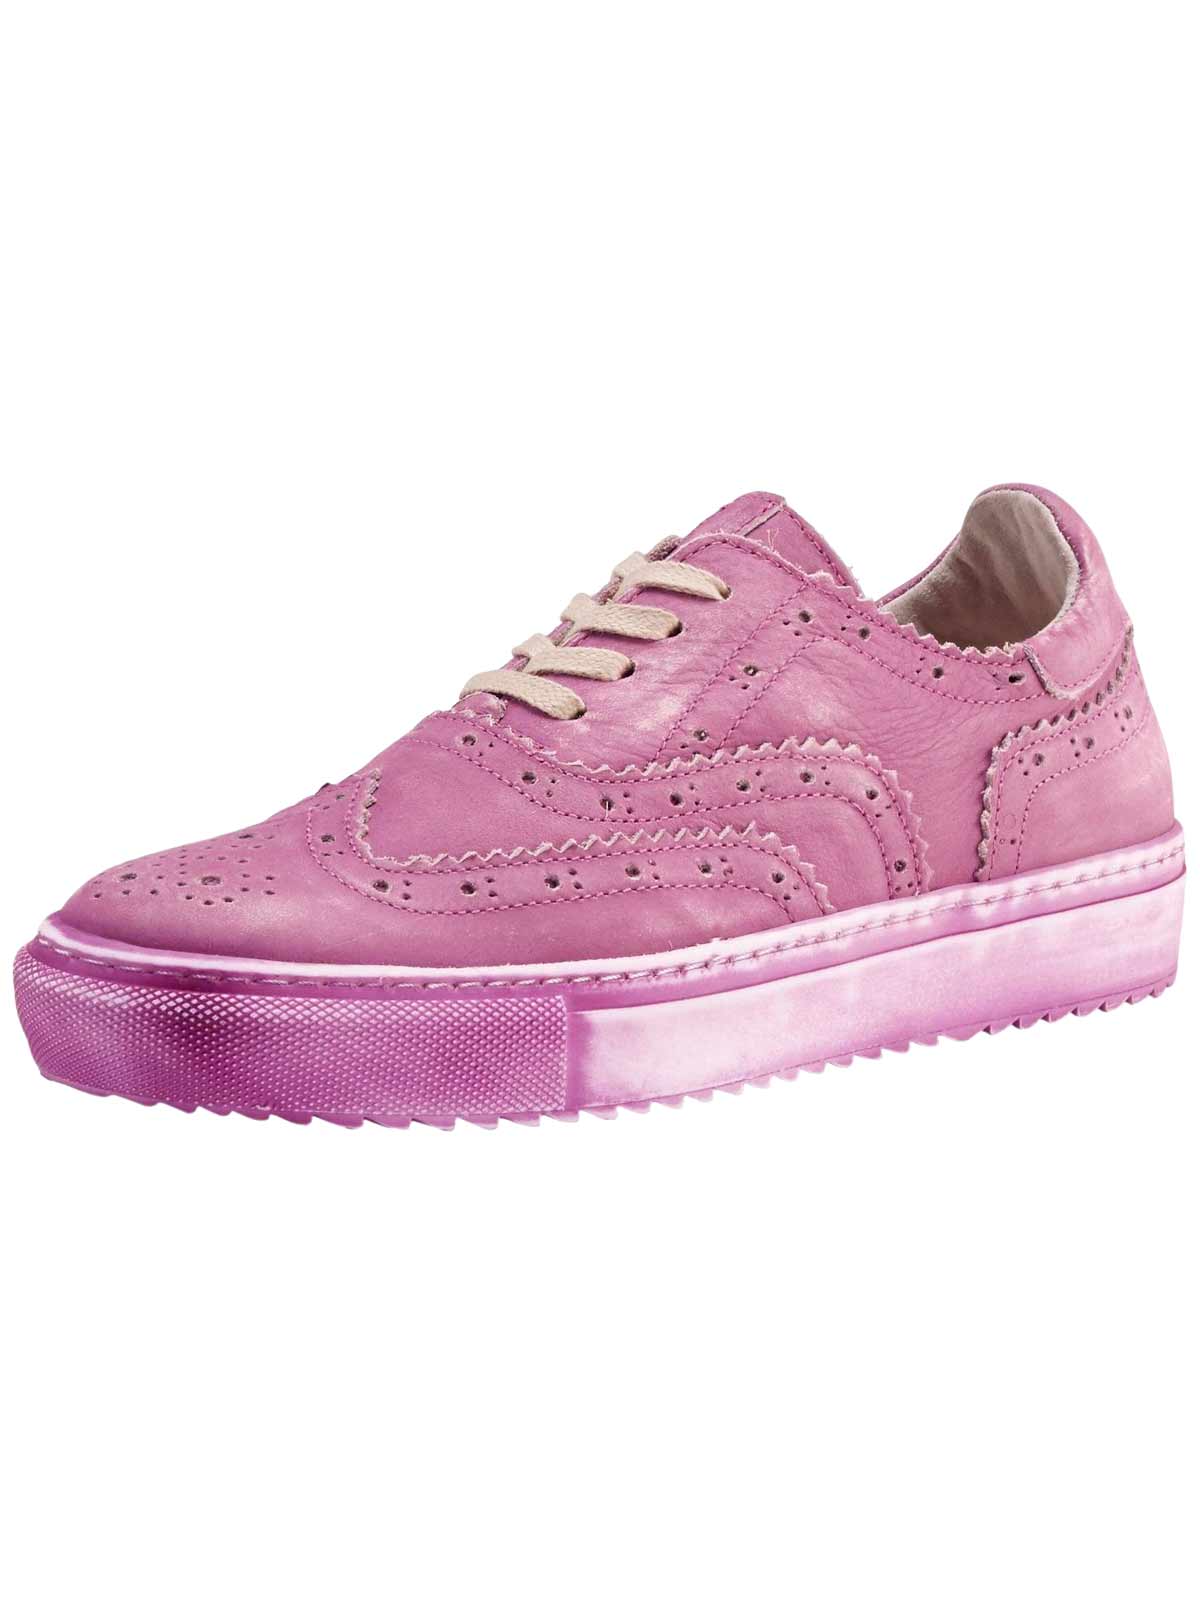 ANDREA CONTI Damen Leder-Sneaker, pink